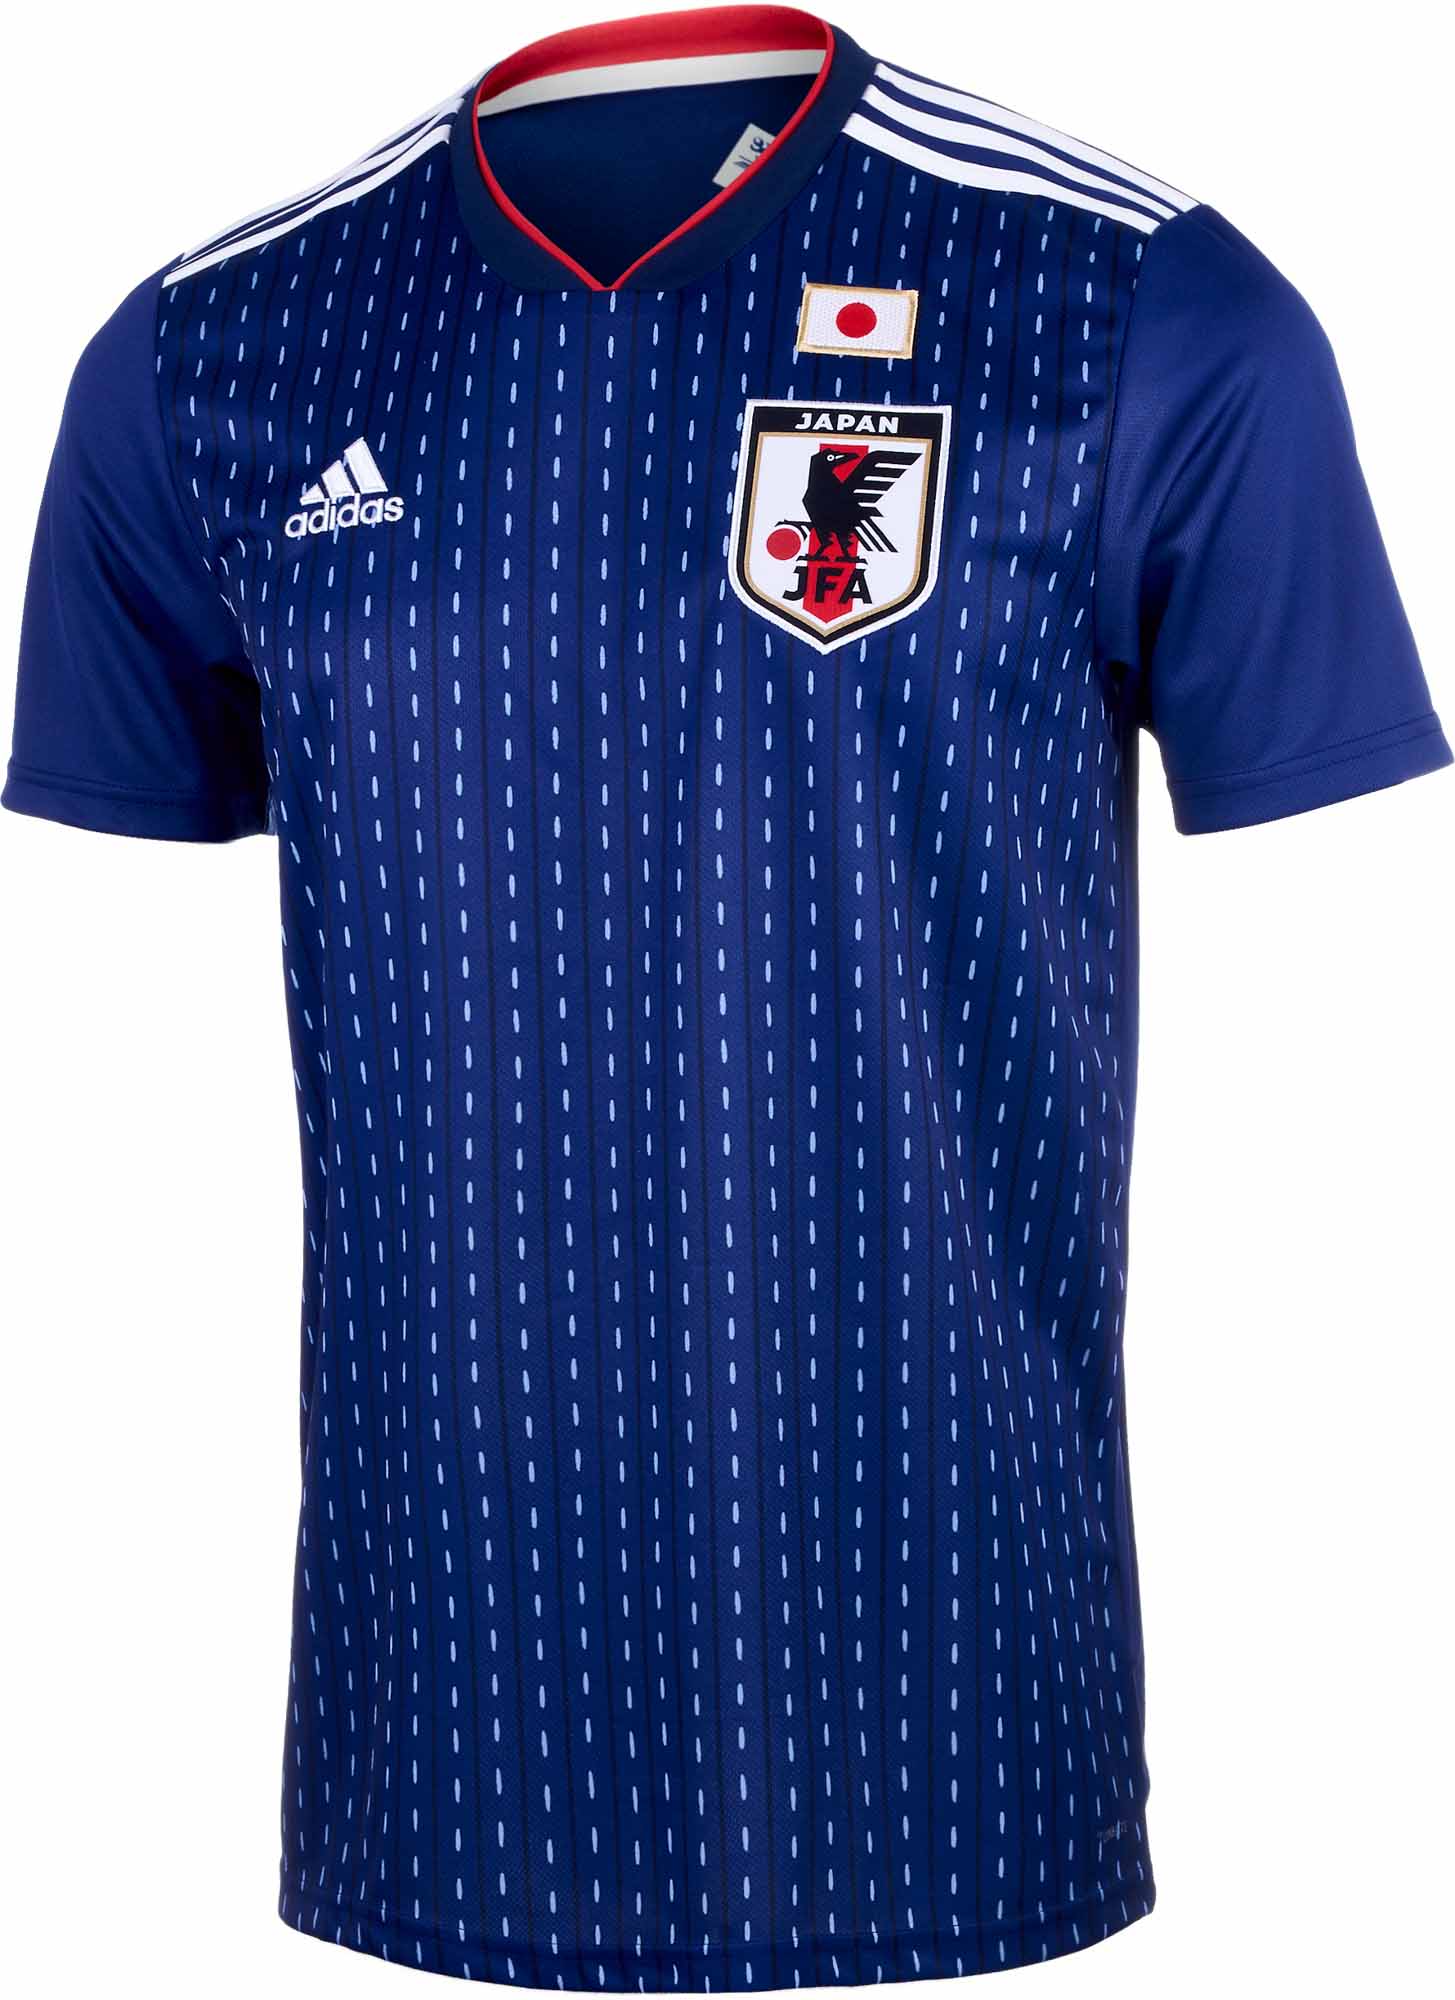 japan men's soccer jersey